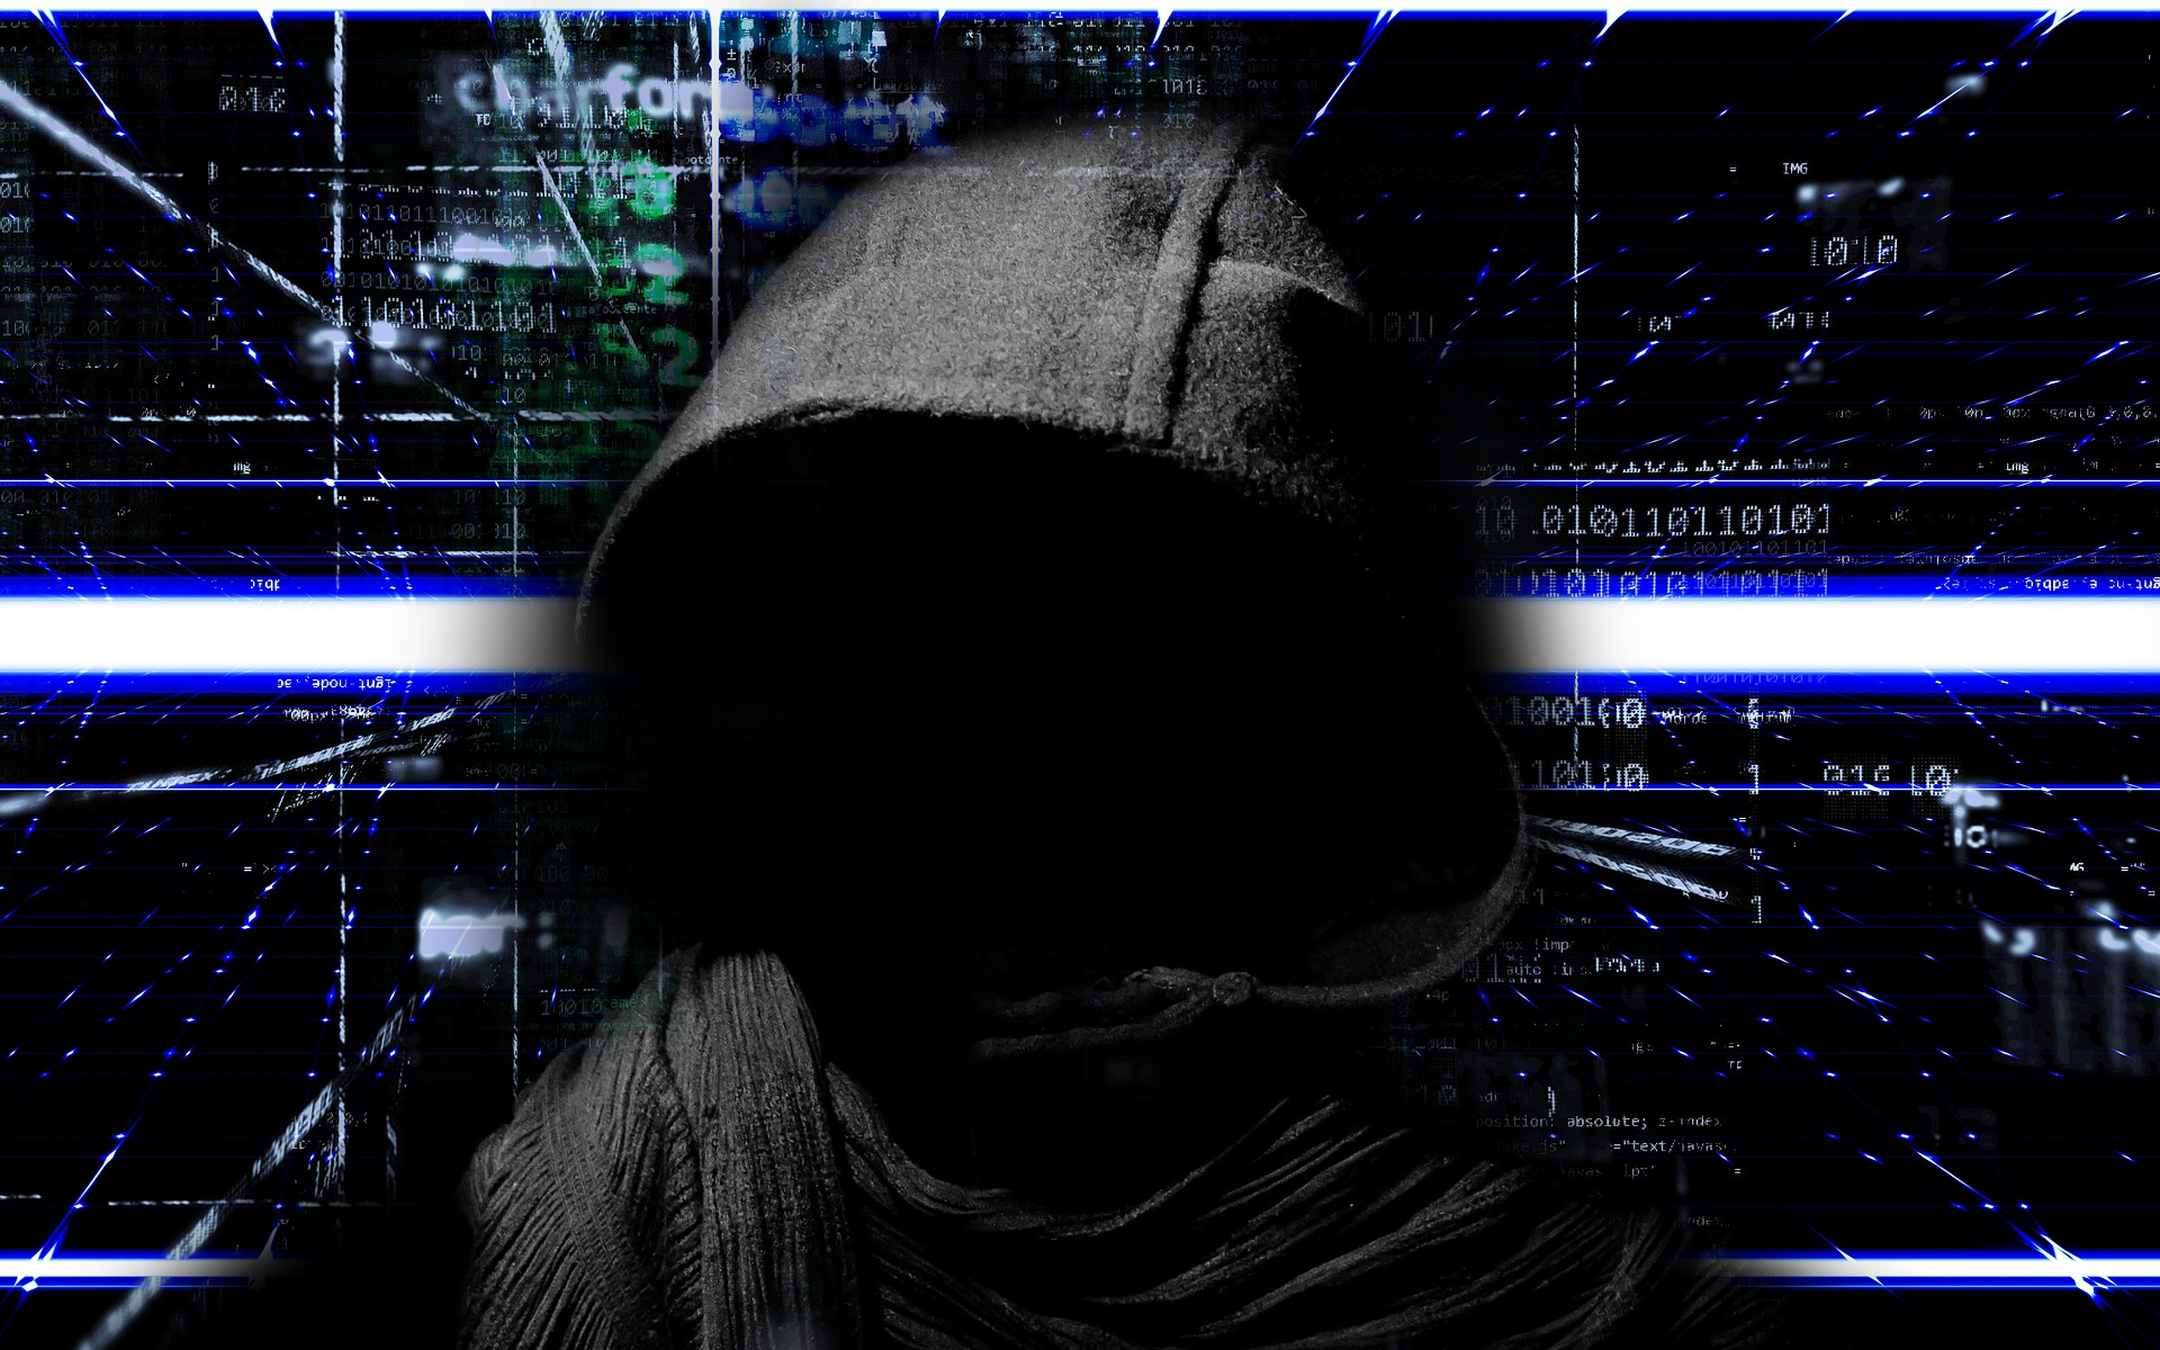 Ryuk ransomware propagates via local network